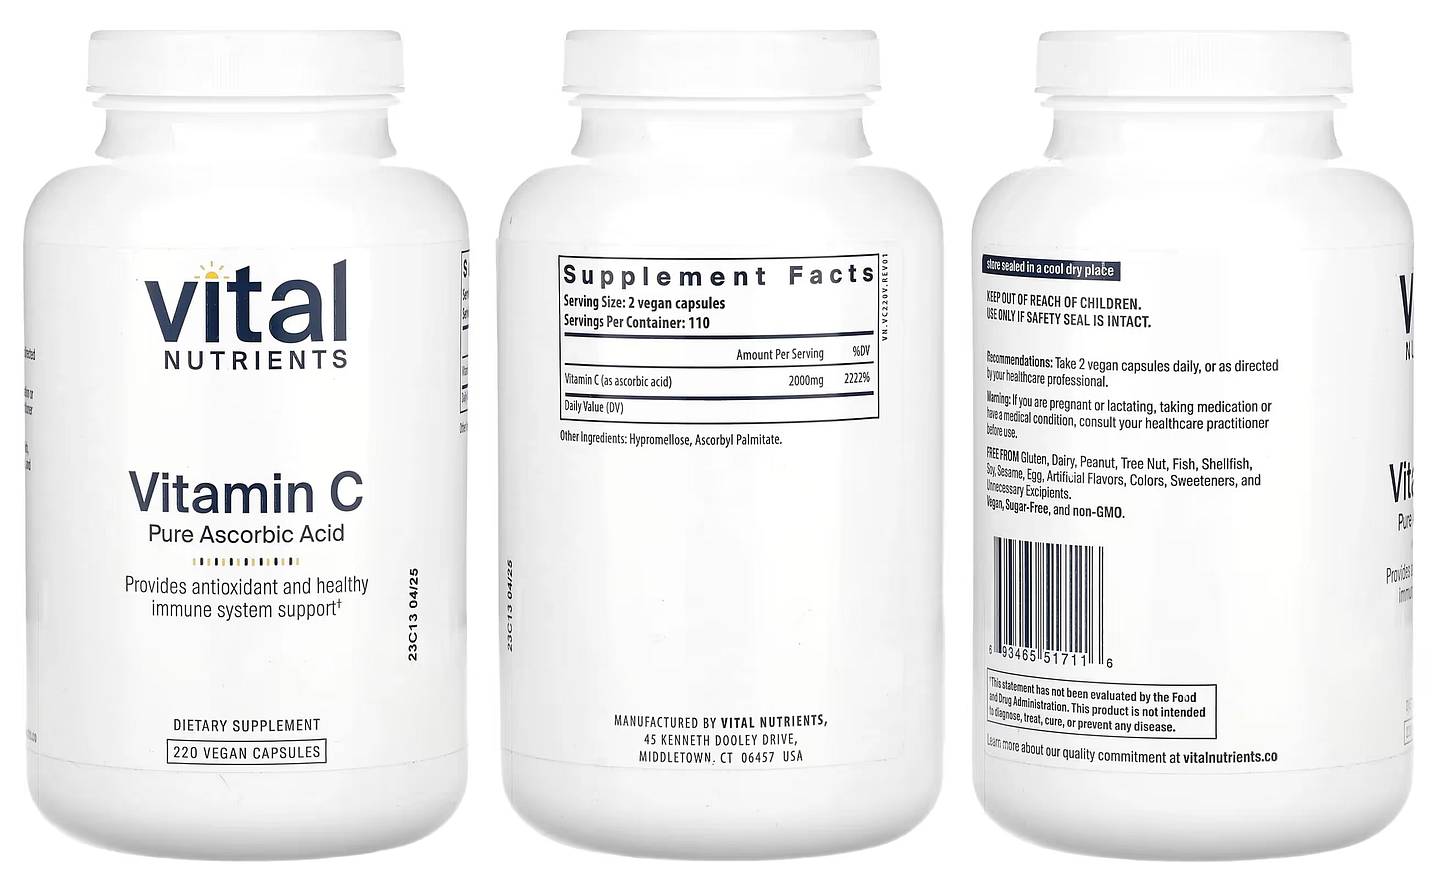 Vital Nutrients, Vitamin C Pure Ascorbic Acid packaging